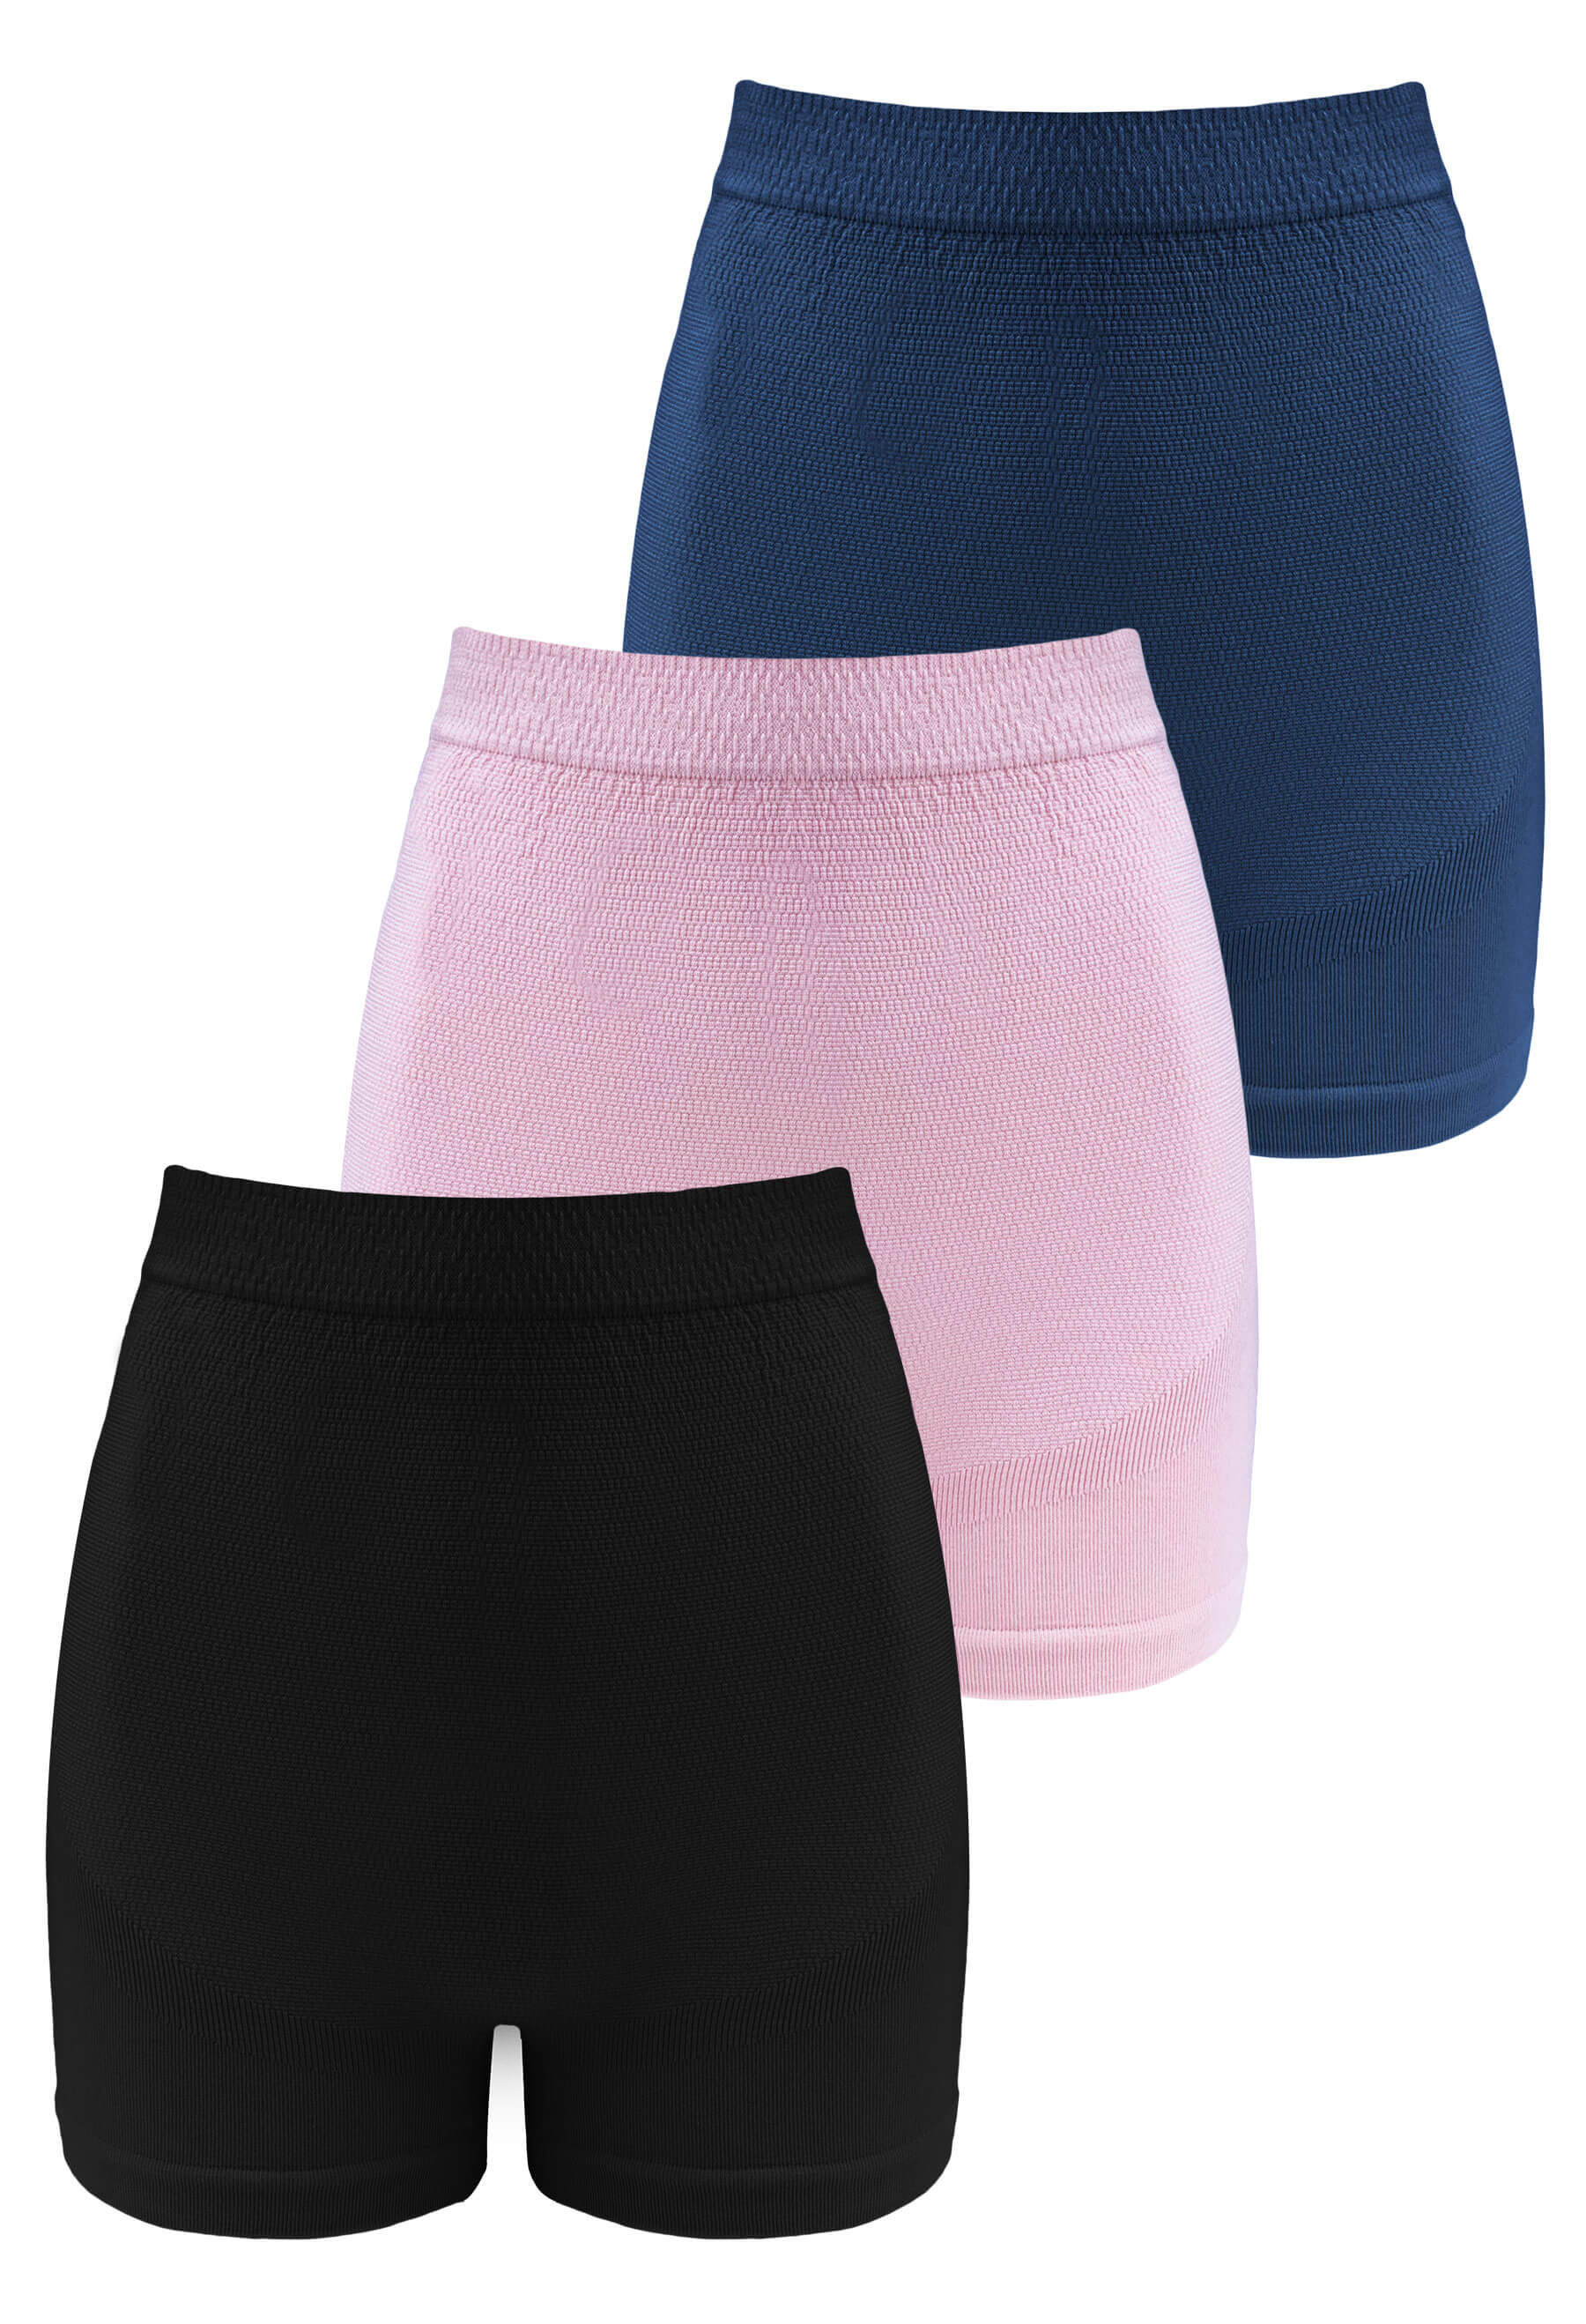 Cotton Maternity Boyleg Shorts - 3 Pack